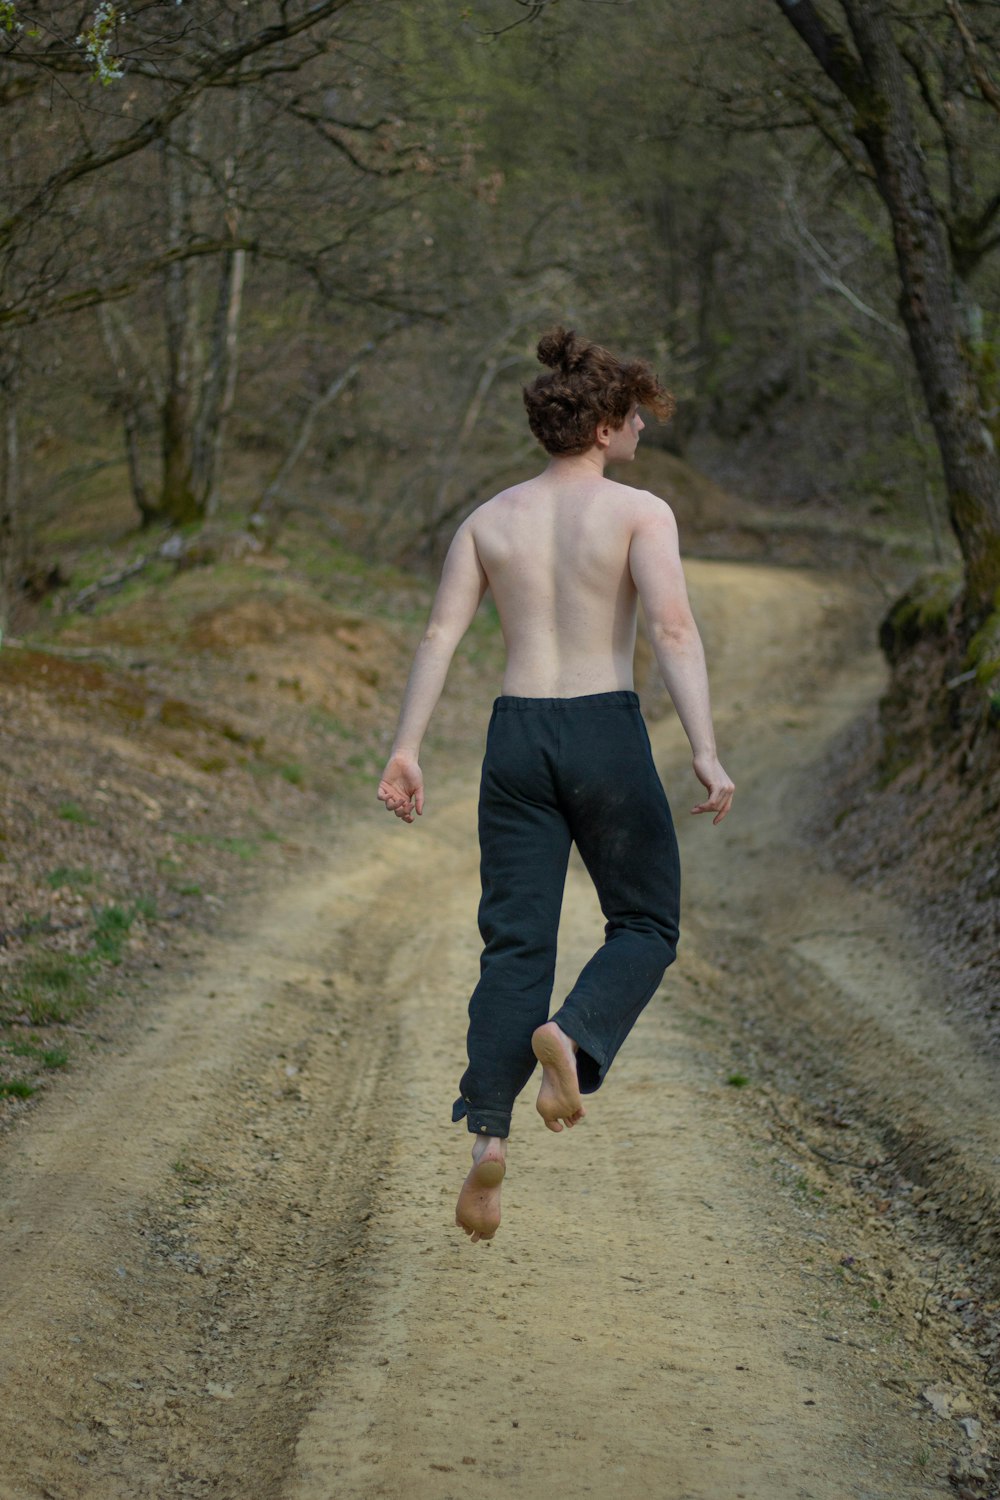 topless man in black pants walking on dirt road during daytime